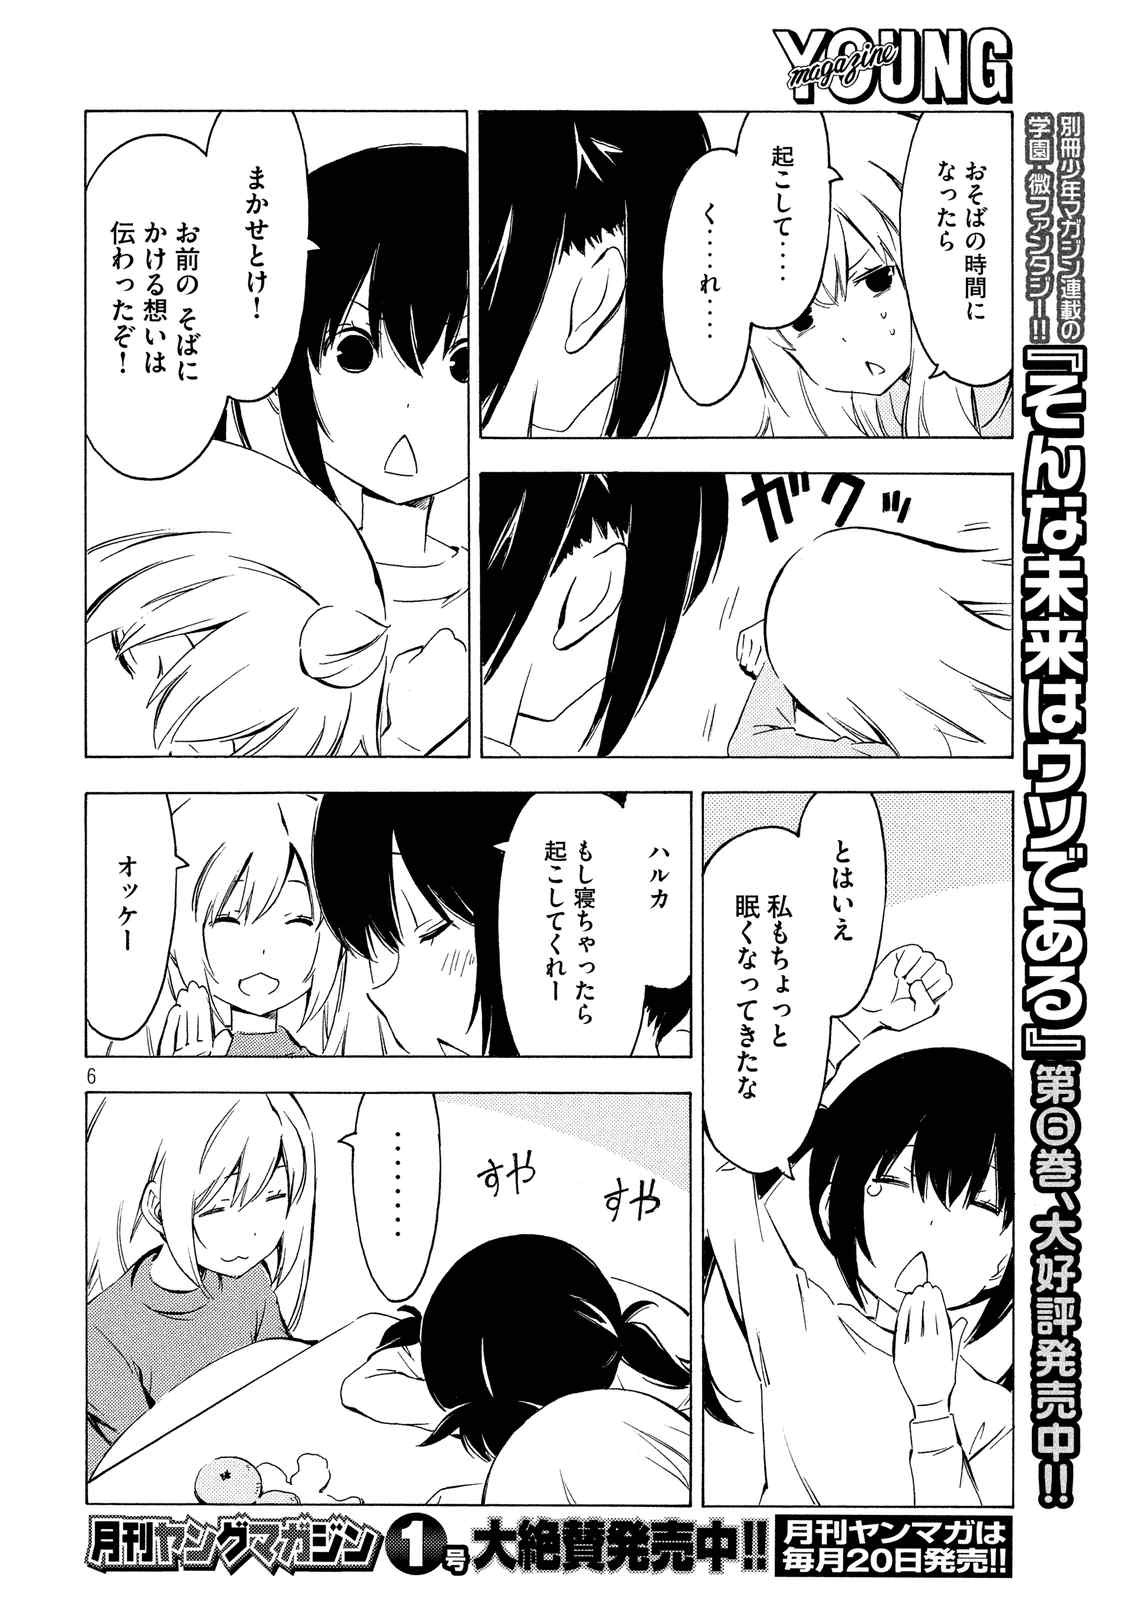 Minami-ke - Chapter 307 - Page 6